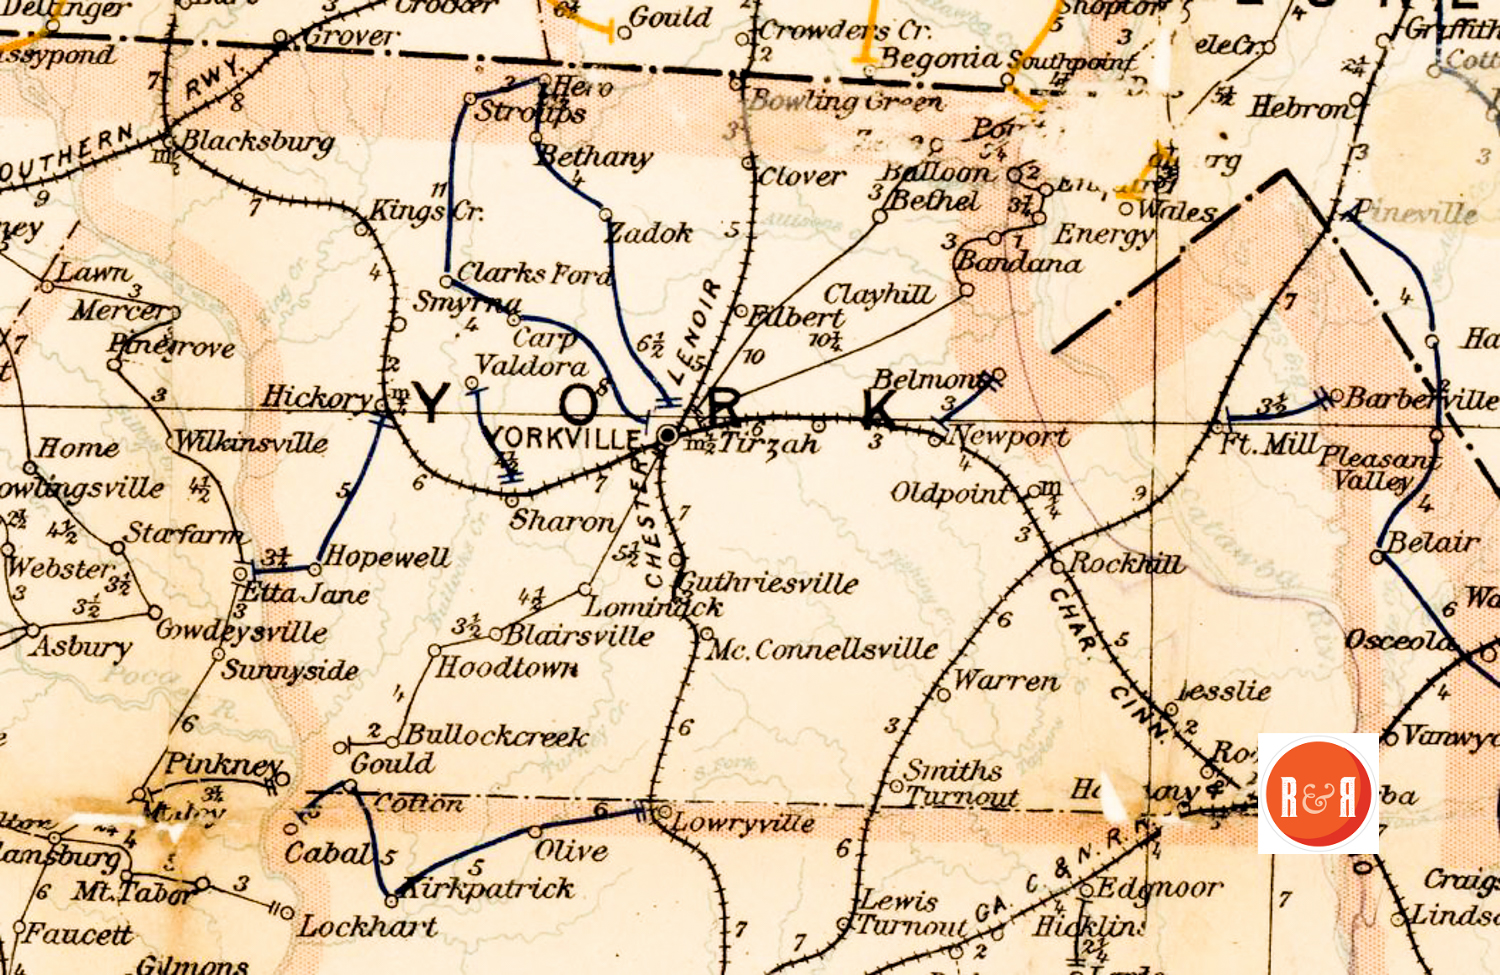 POSTAL MAP SHOWING BLAIRSVILLE - LATE 19TH CENTURY